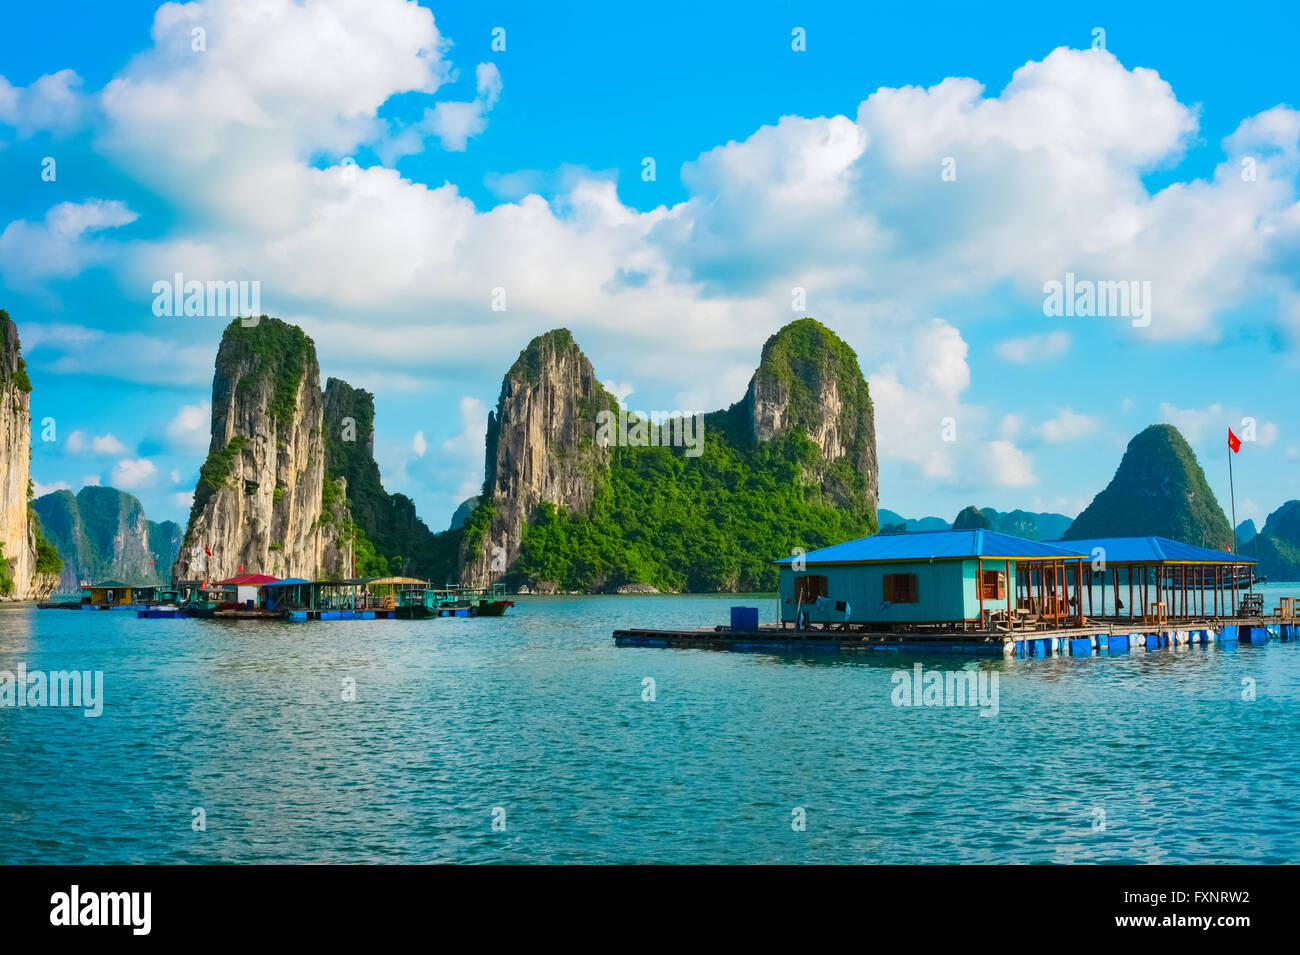 Floating village near rock islands in Halong Bay, Vietnam, Southeast Asia. UNESCO World Heritage Site. Stock Photo